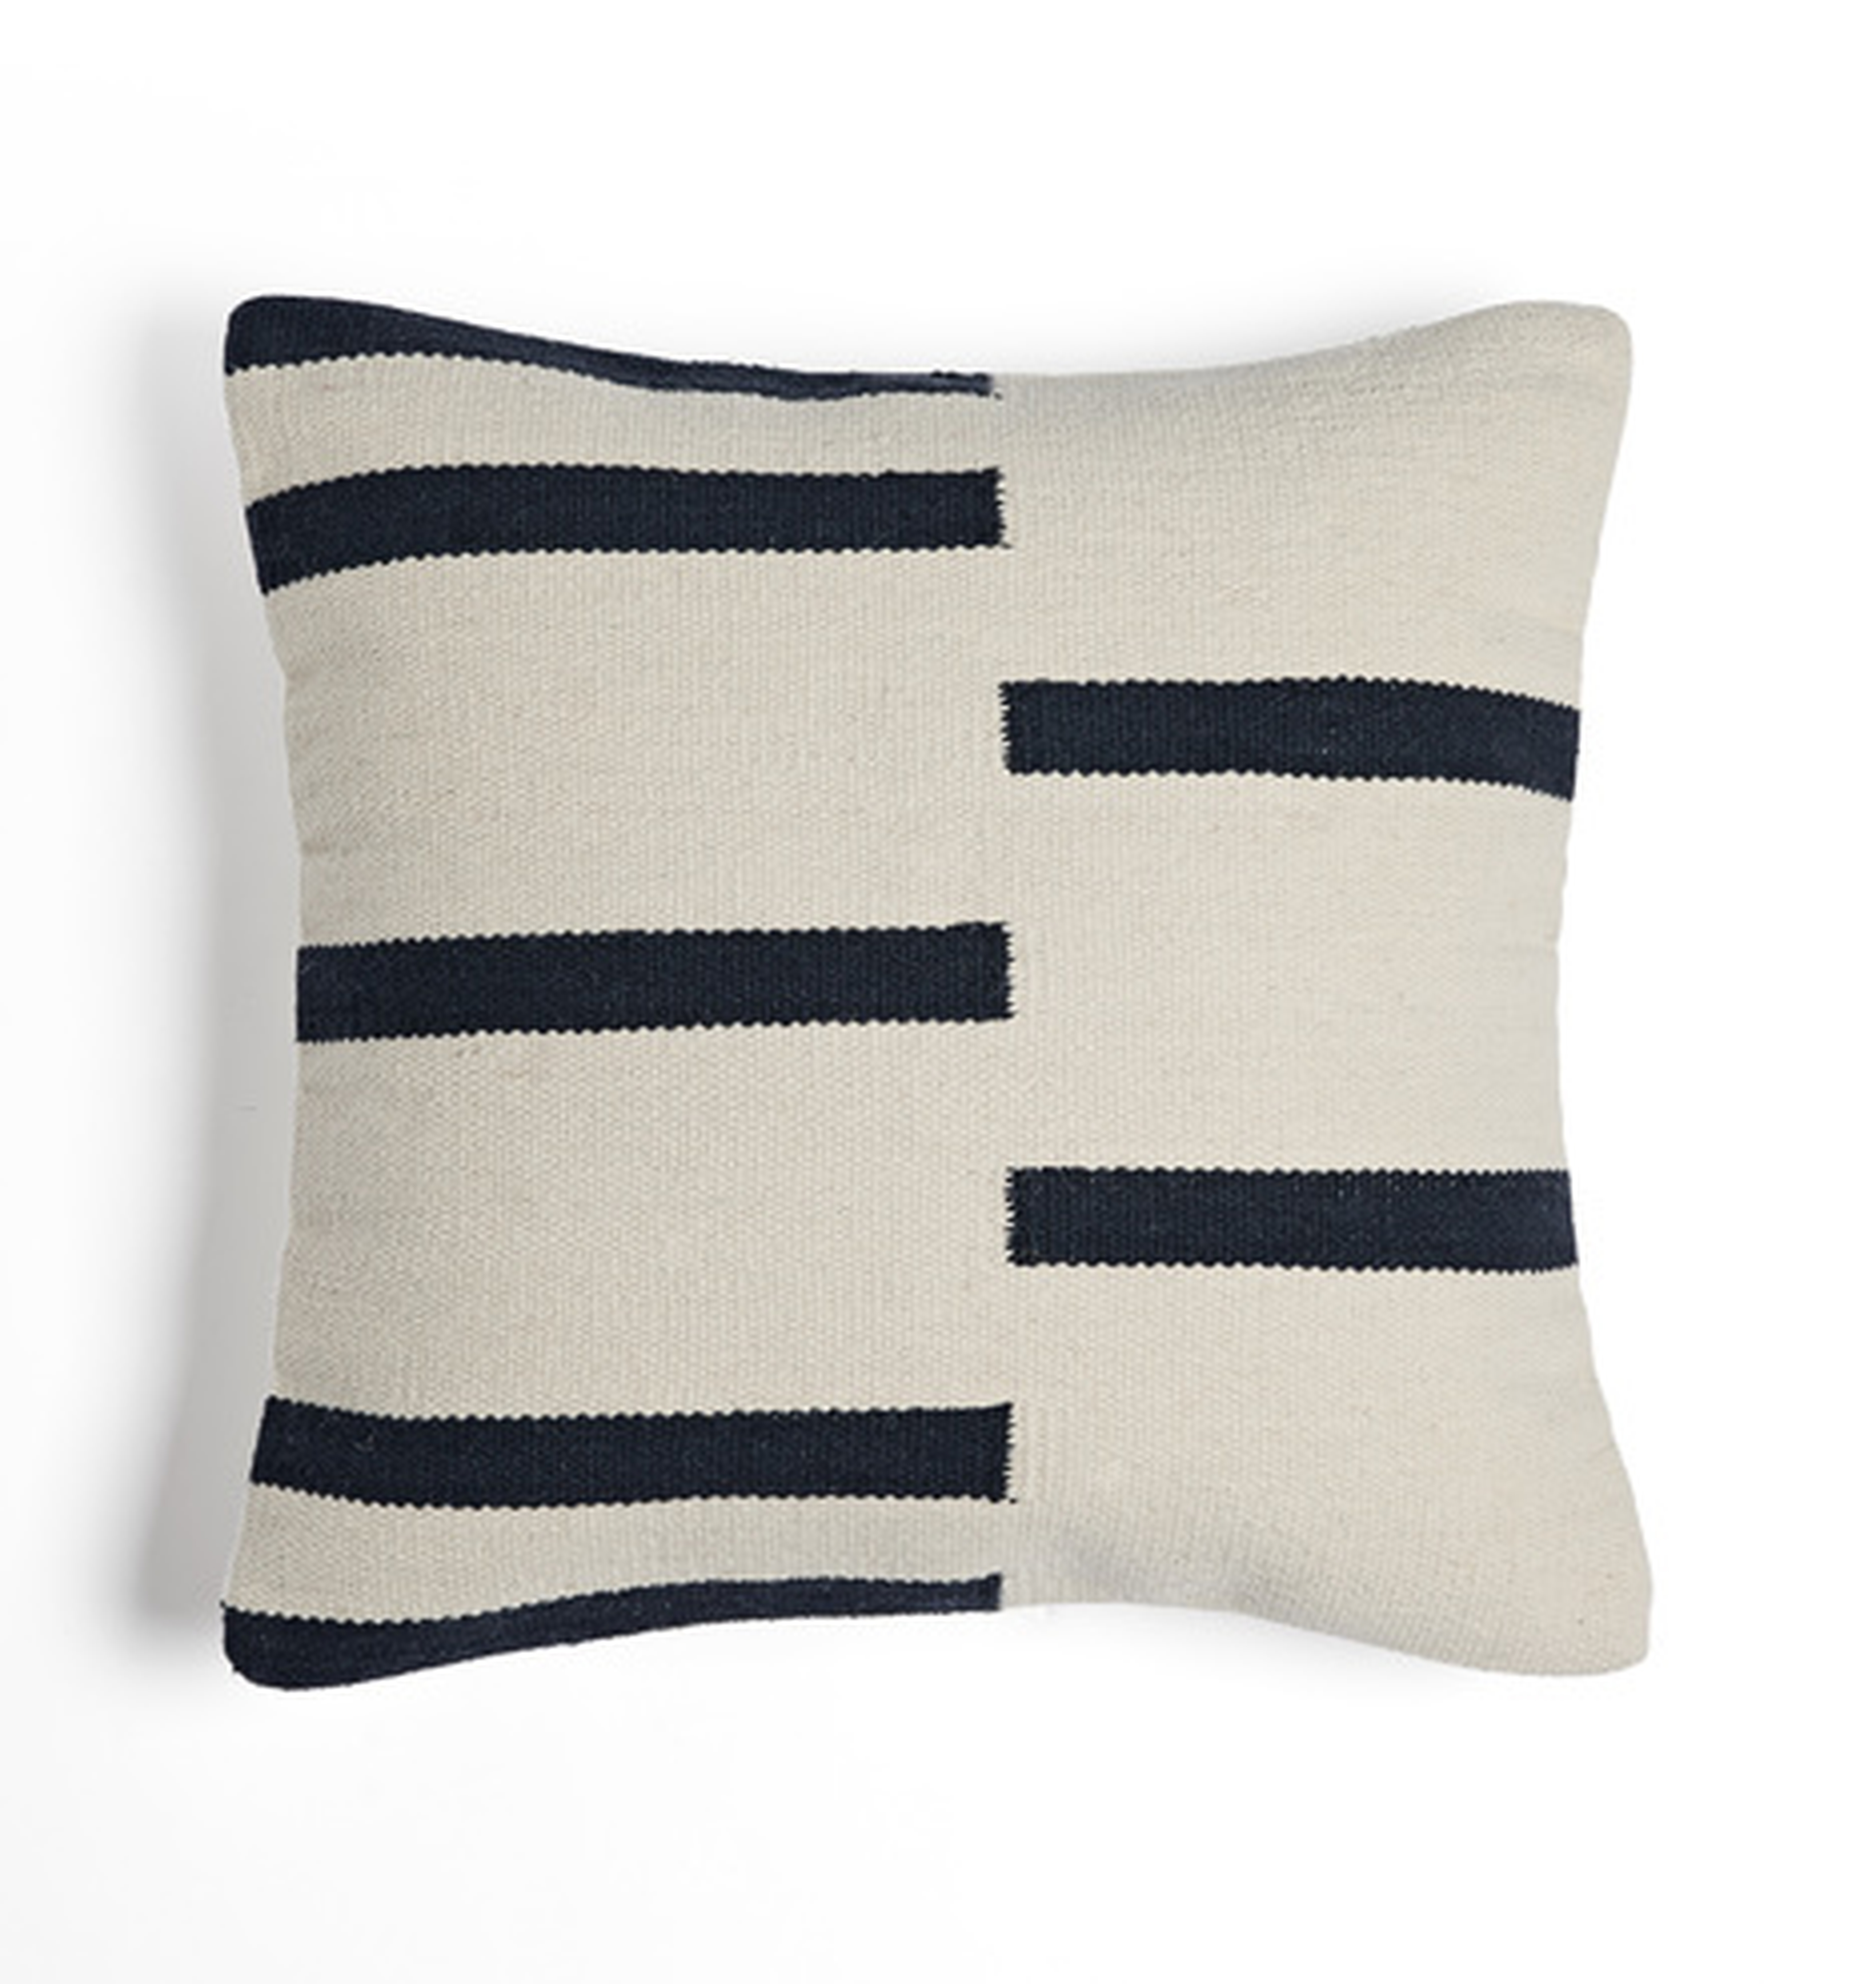 Woven Mohair Dashed Stripe Pillow Cover - Rejuvenation